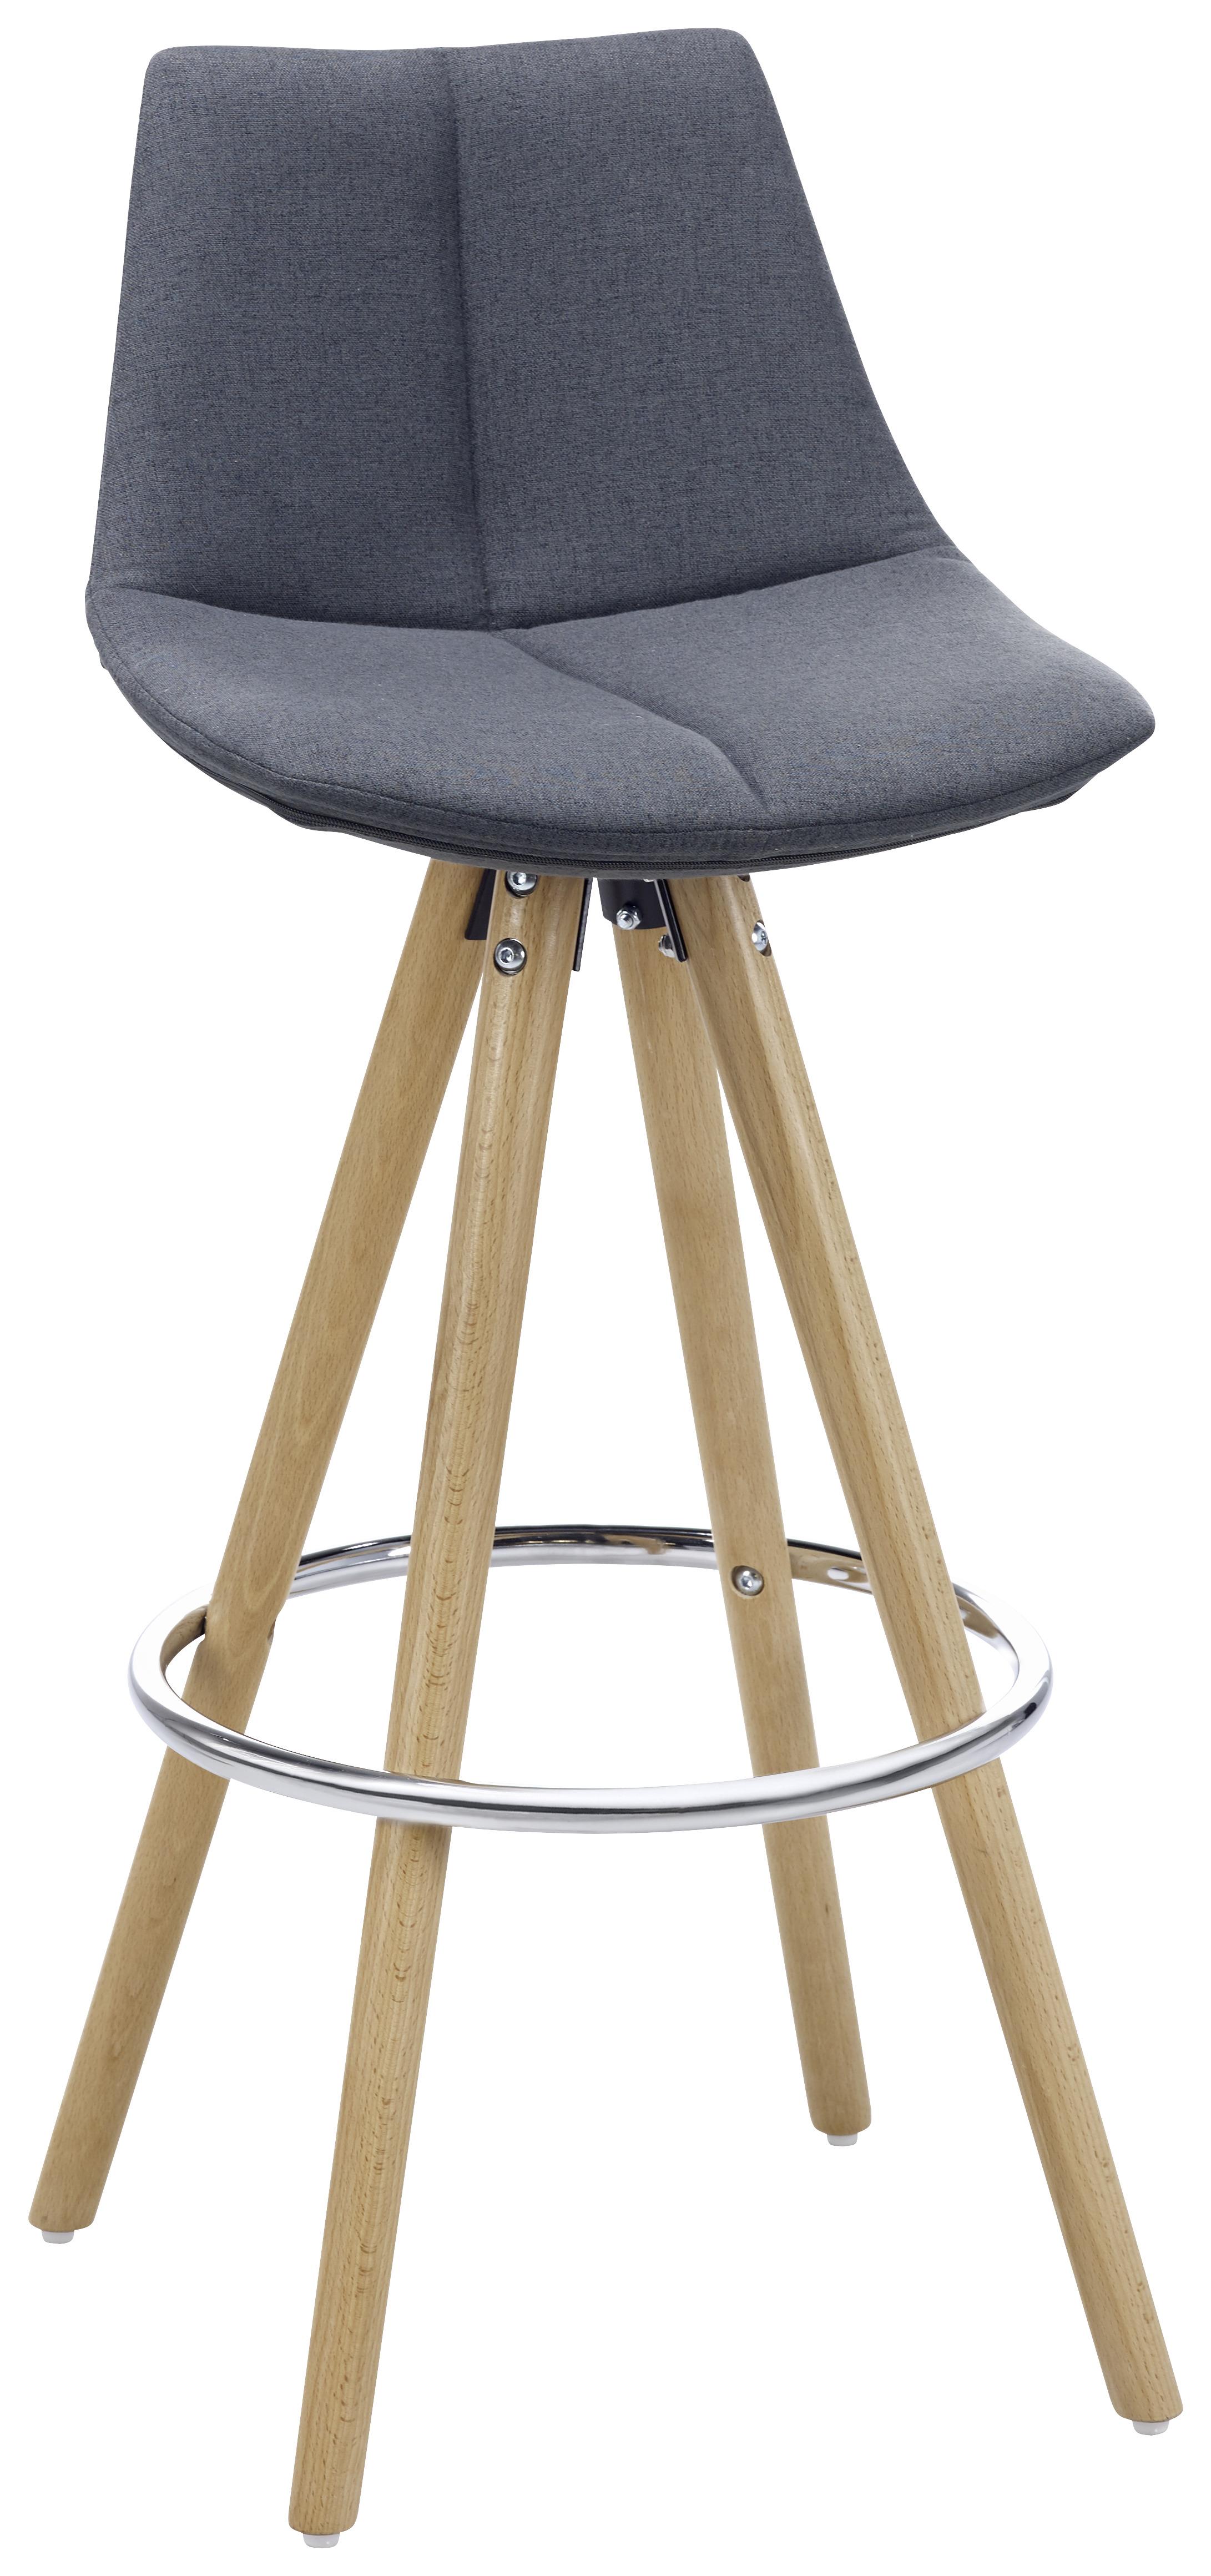 Barová Židle Nelo - šedá/barvy buku, Moderní, kov/dřevo (42/100/33cm) - Modern Living